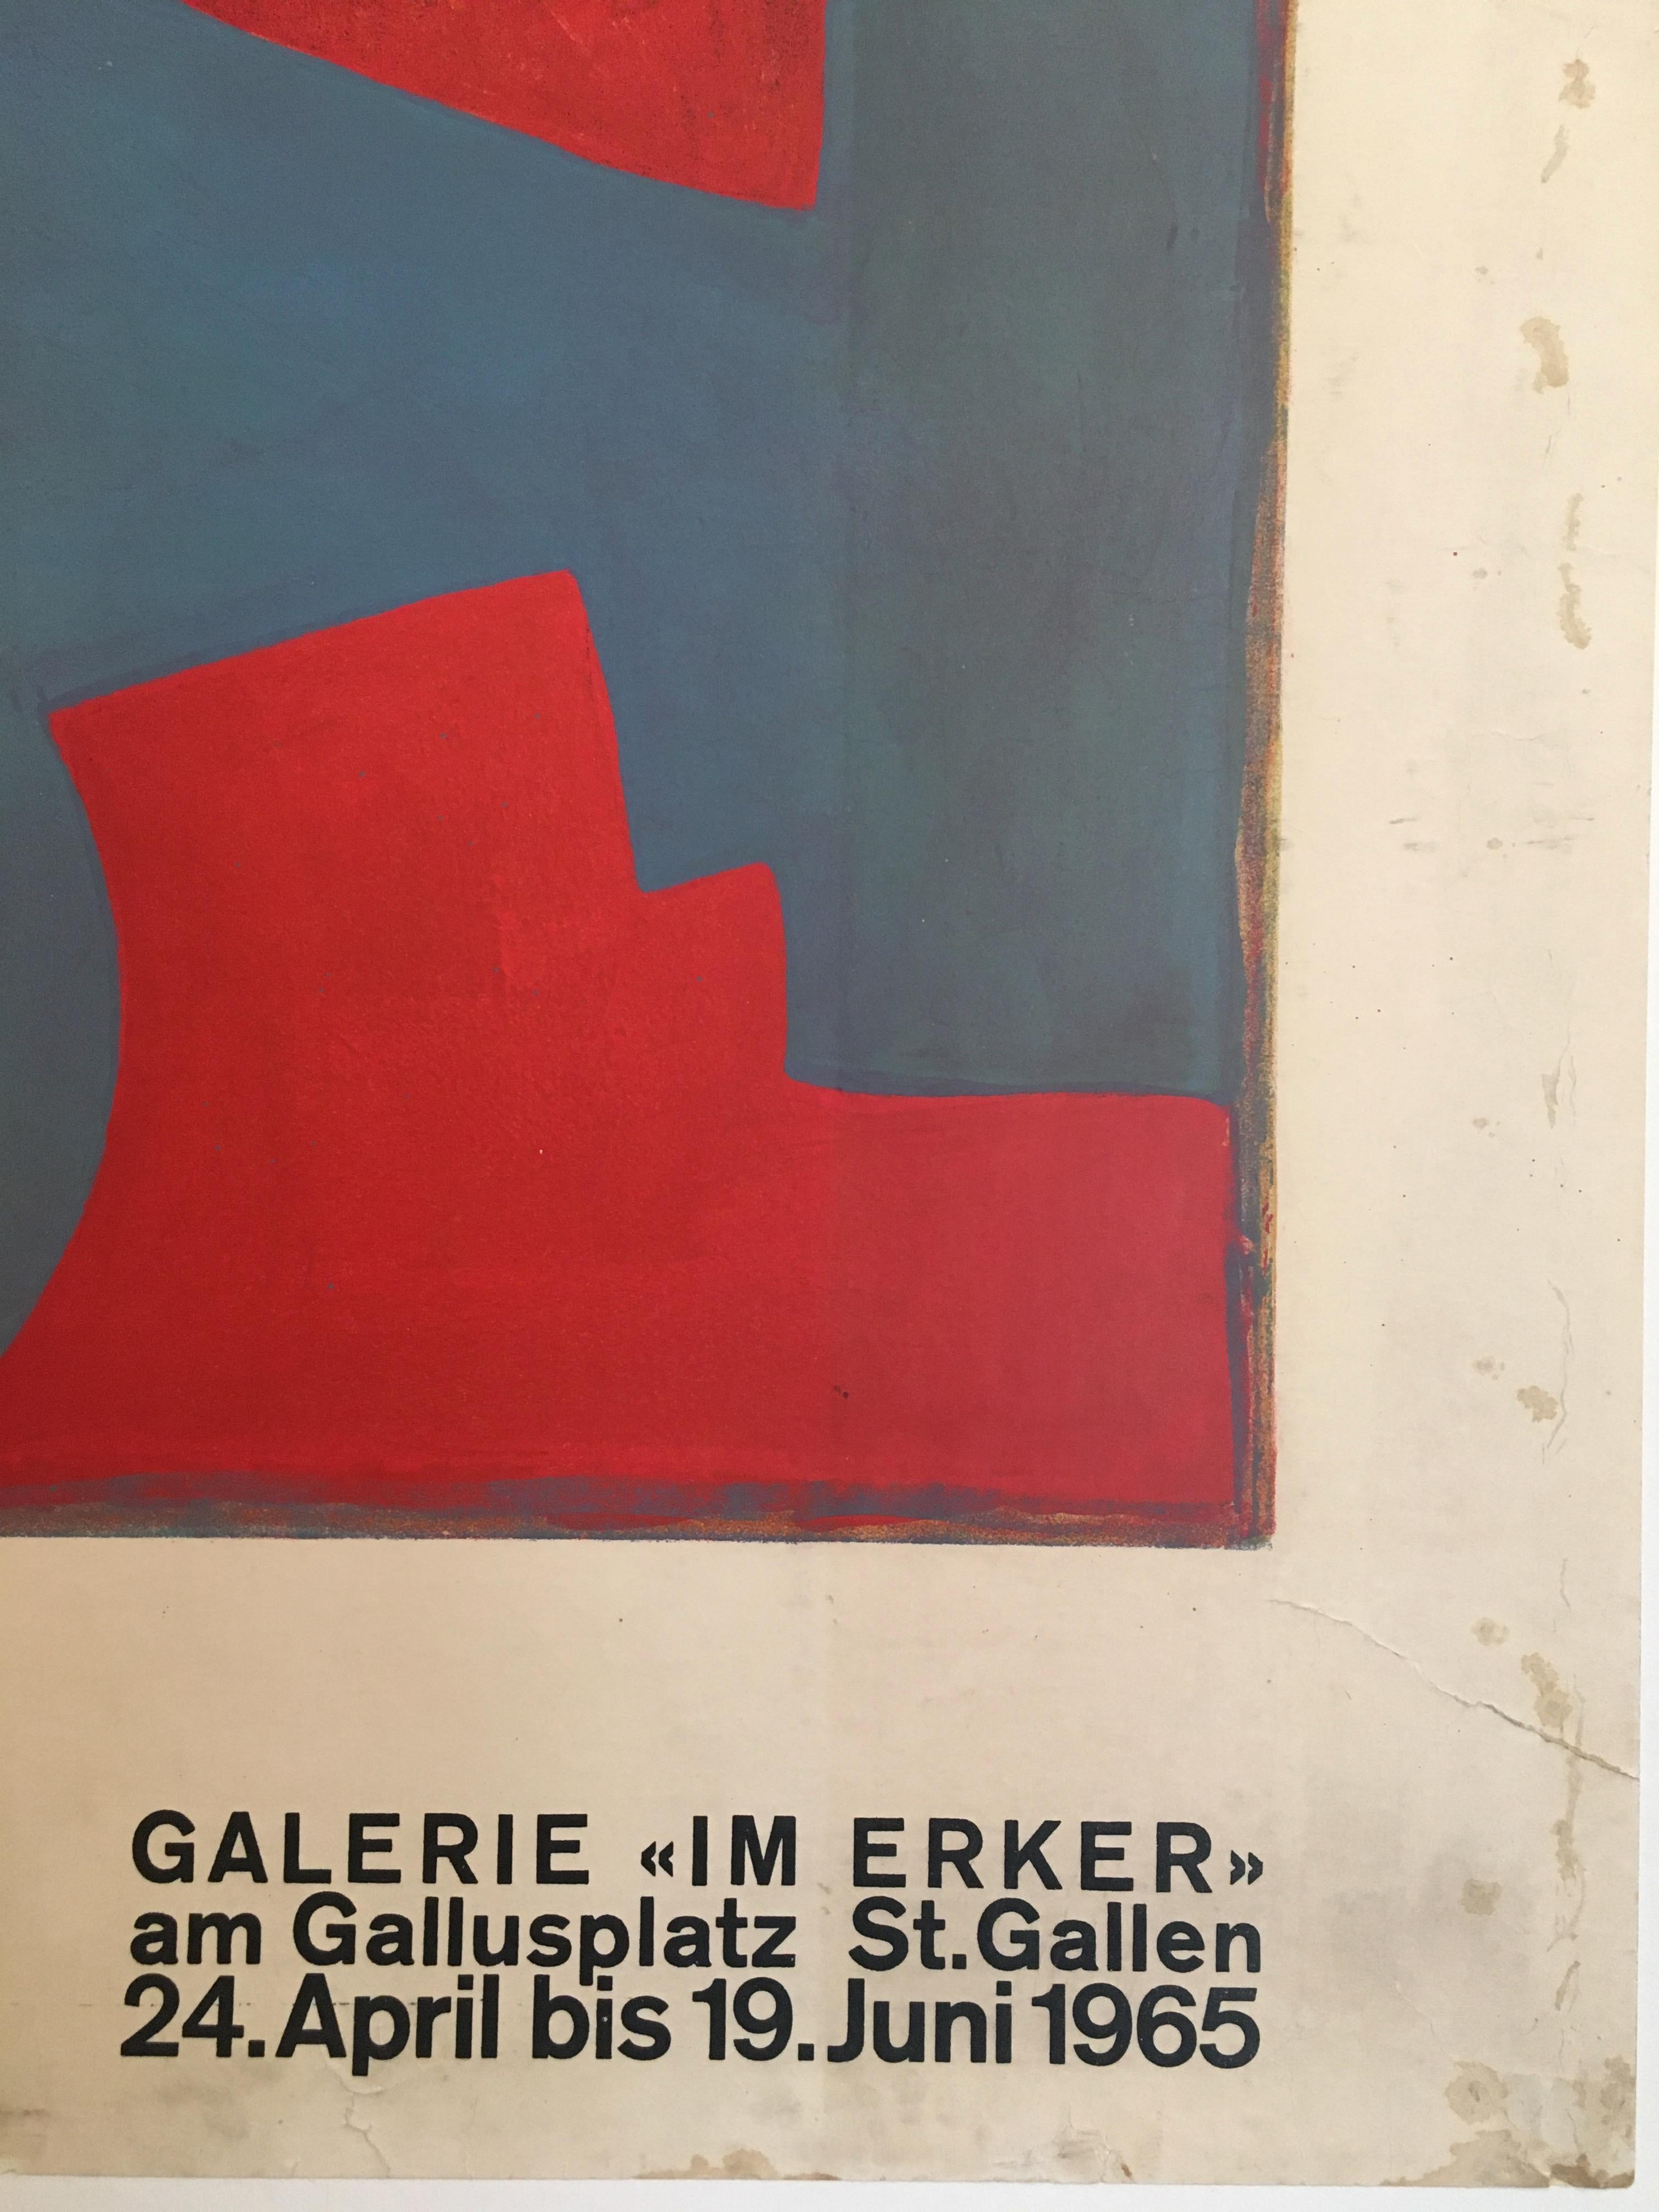 Original vintage exhibition poster by Serge Poliakoff 1965 Modernist Art

